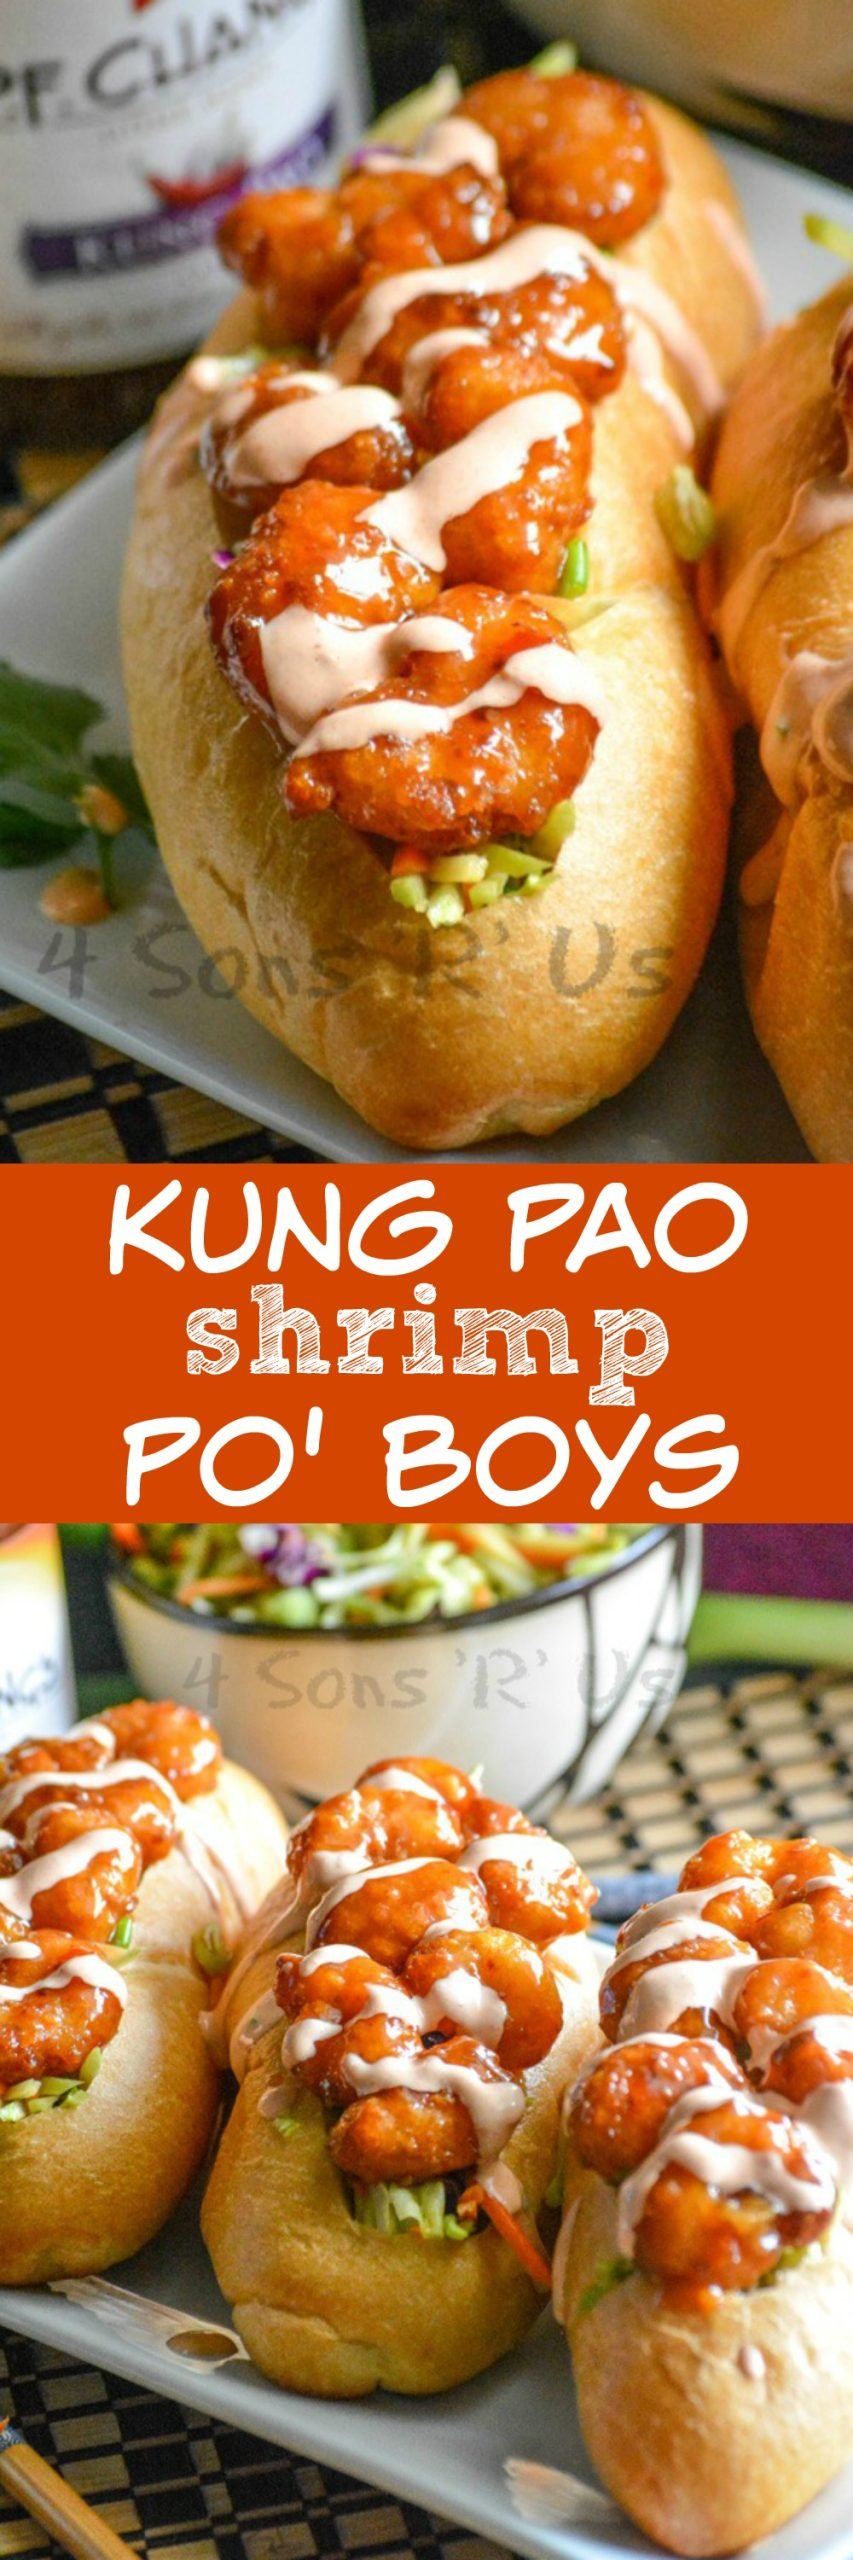 Kung Pao Shrimp Po' Boys - 4 Sons 'R' Us